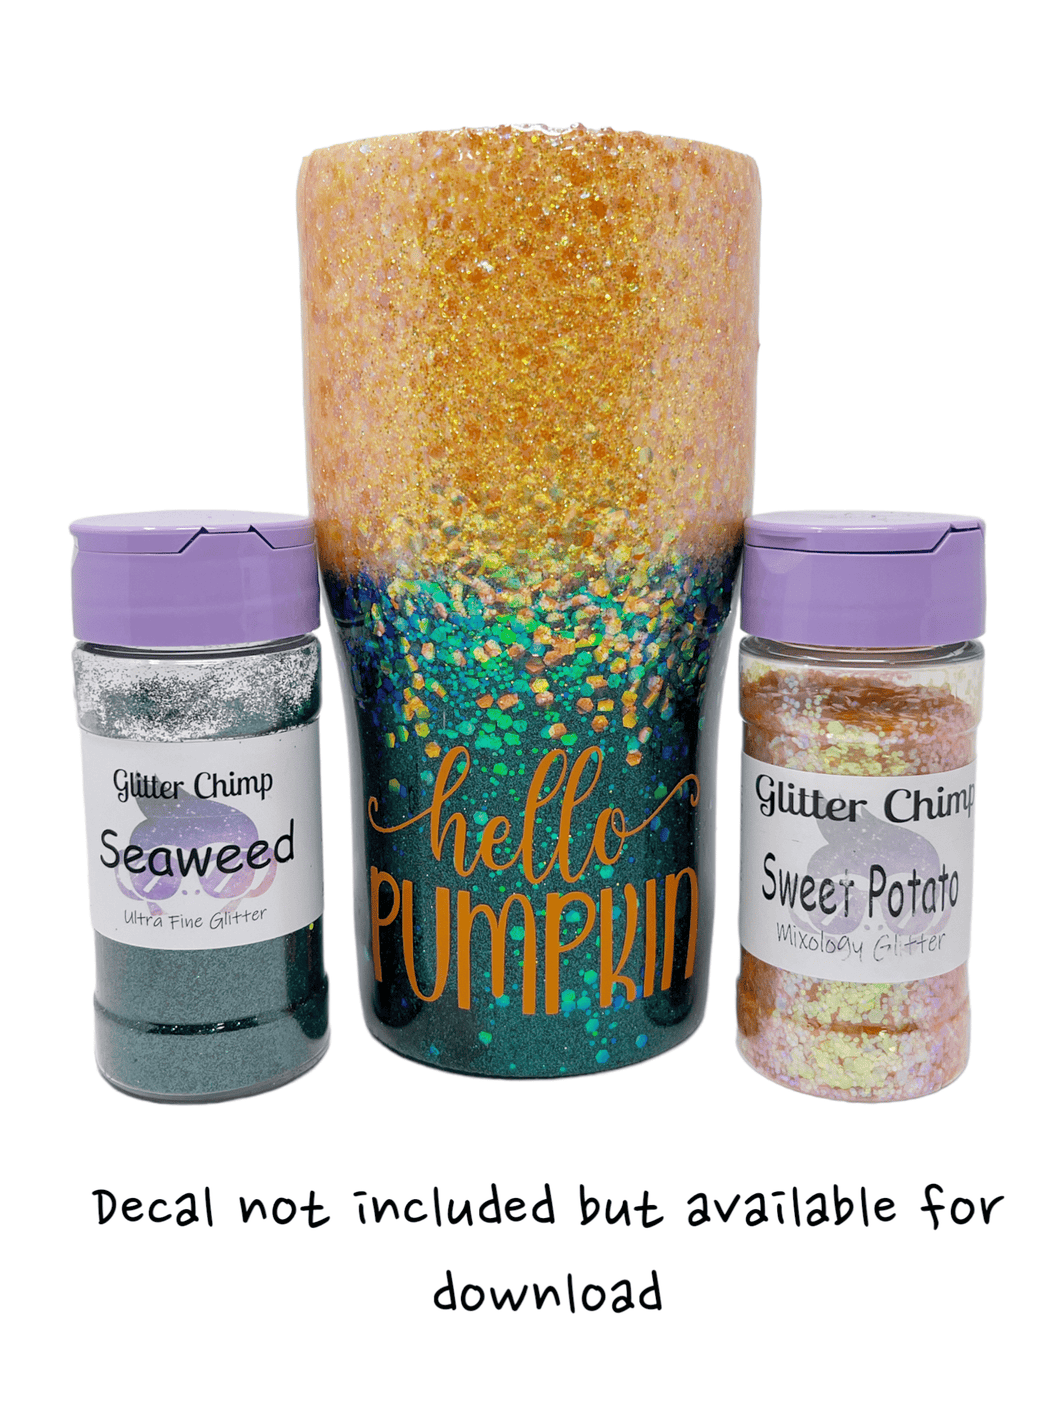 Perfect Pairing Hello Pumpkin Pack - Seaweed Ultra Fine Glitter & Sweet Potato Mixology Glitter